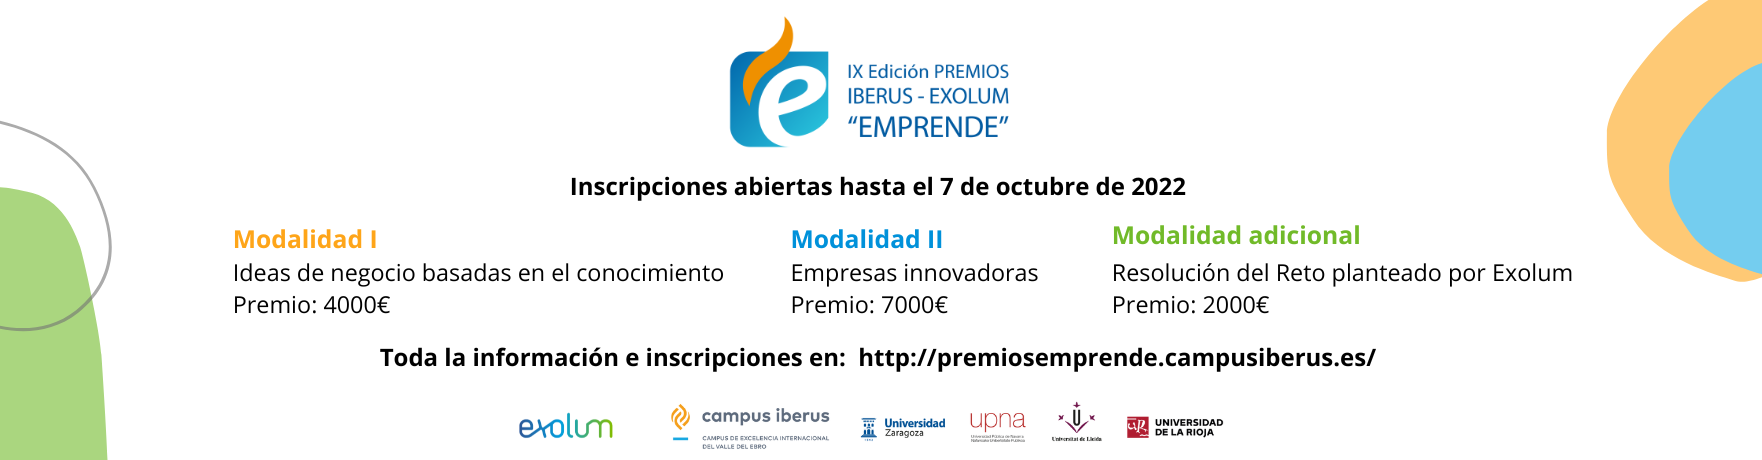 http://premiosemprende.campusiberus.es/